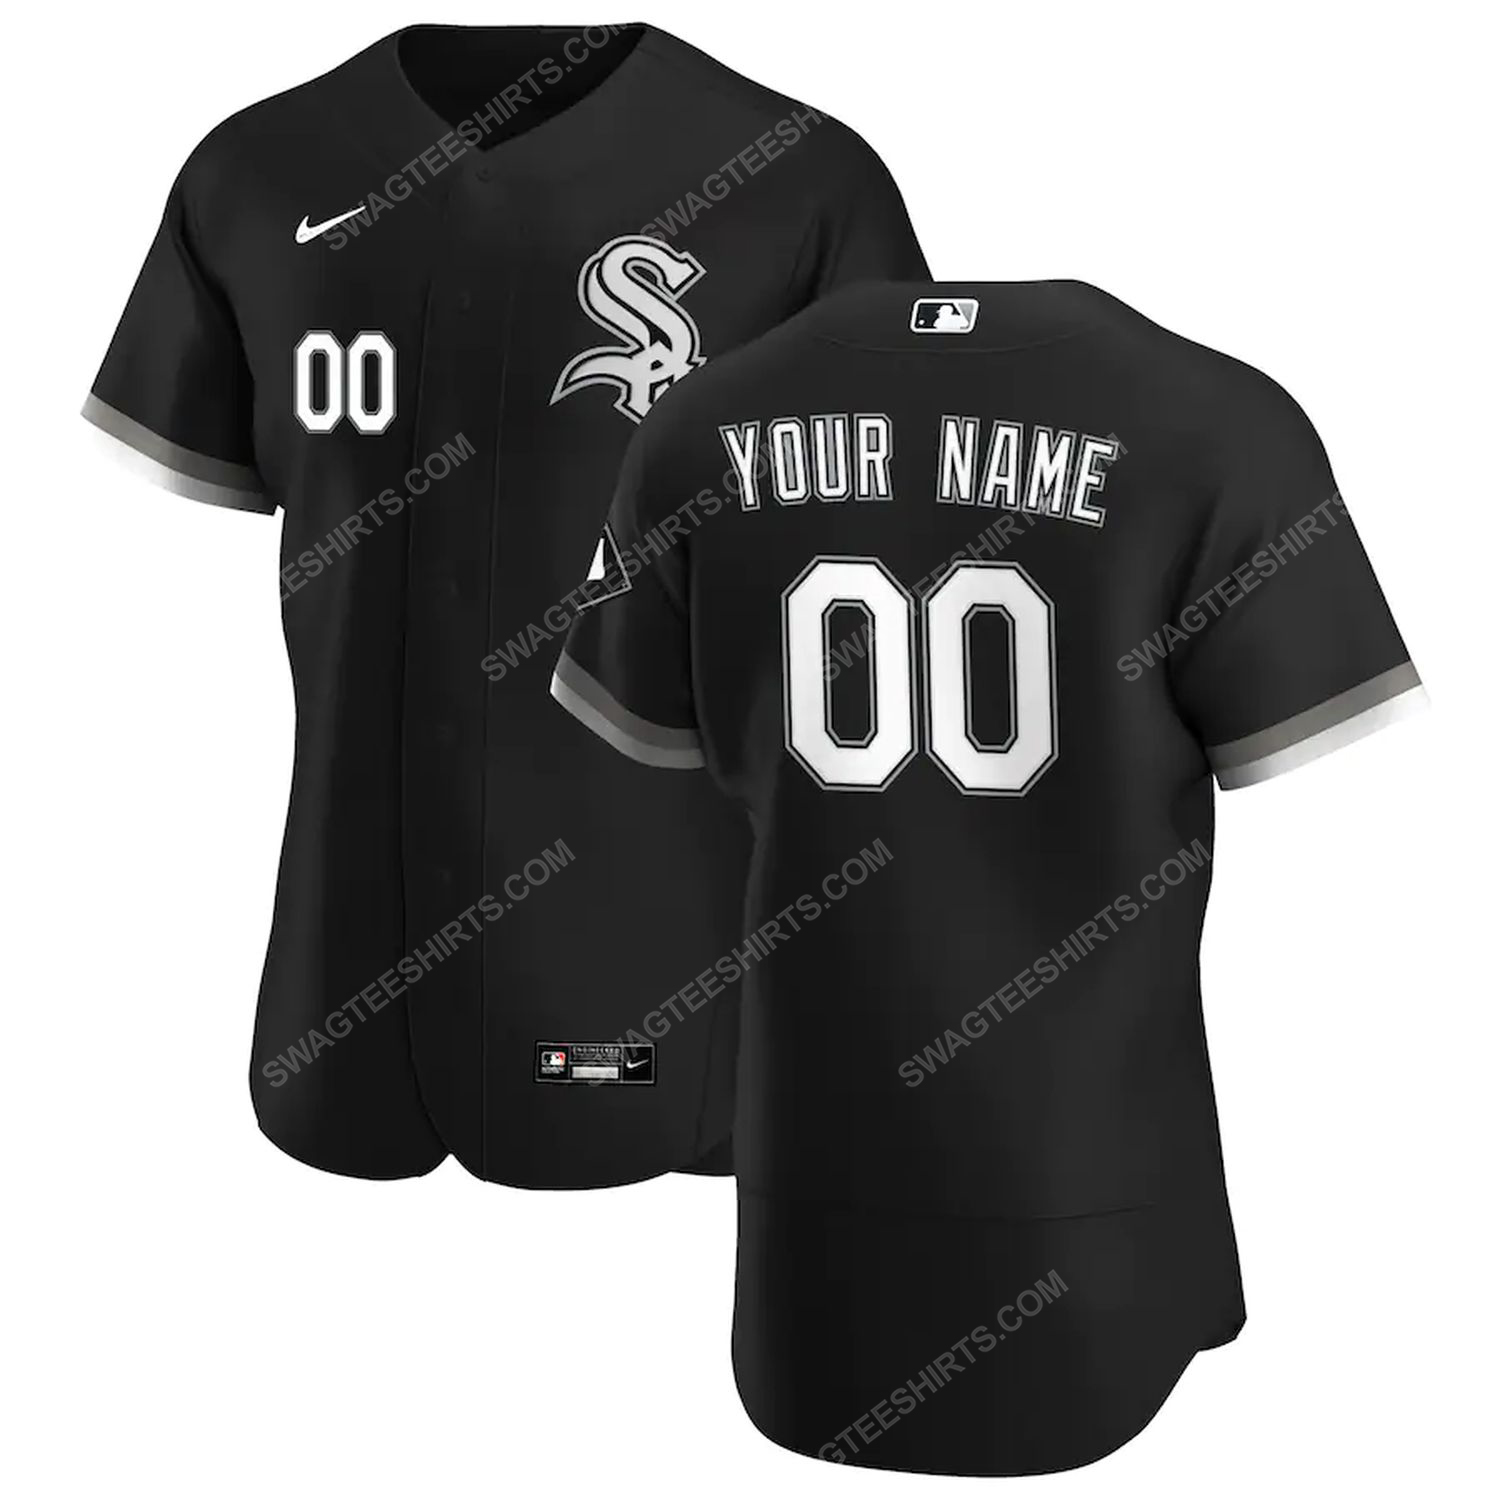 Personalized mlb chicago white sox baseball jersey-black